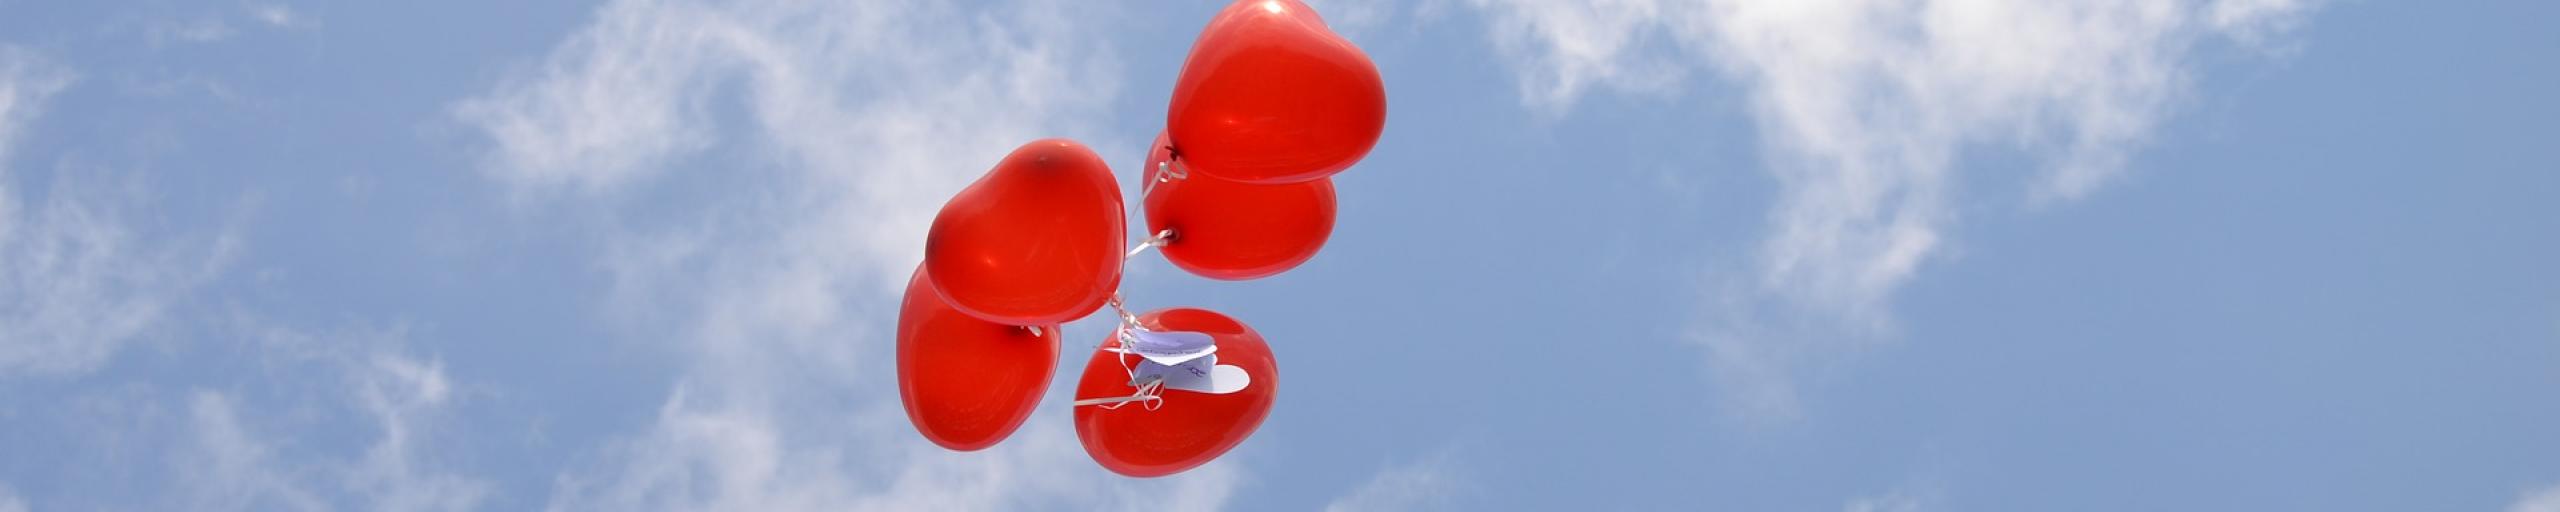 Rode hartjes ballonnen in een zonnige lucht